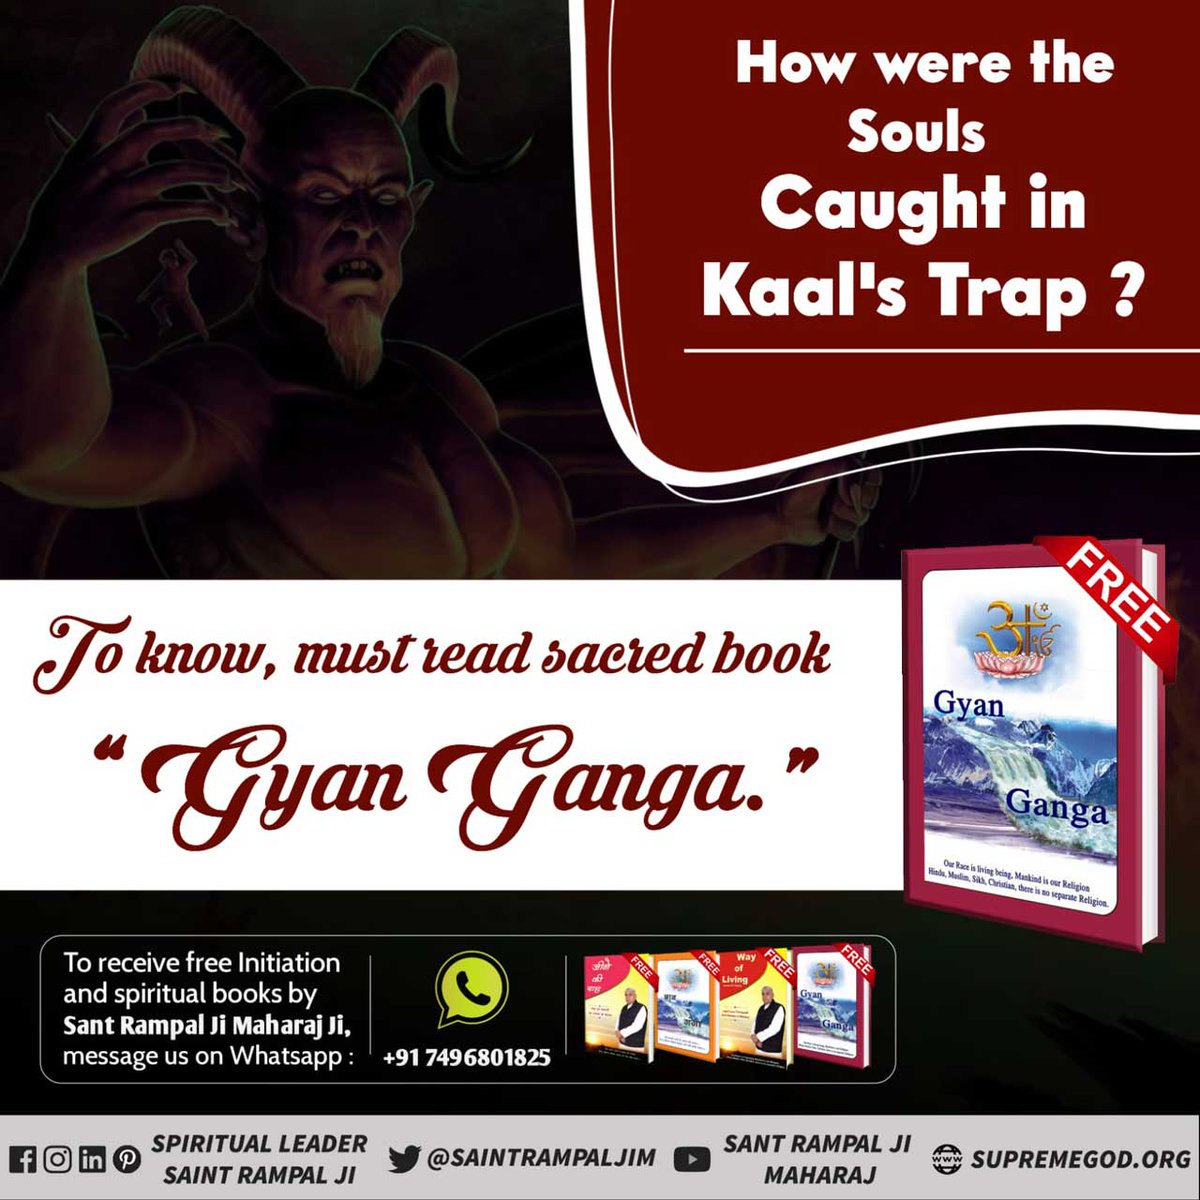 #bookphotography 
#SantRampalJiMaharaj 
#सत_भक्ति_संदेश 
How were the souls caught in kall's trap?